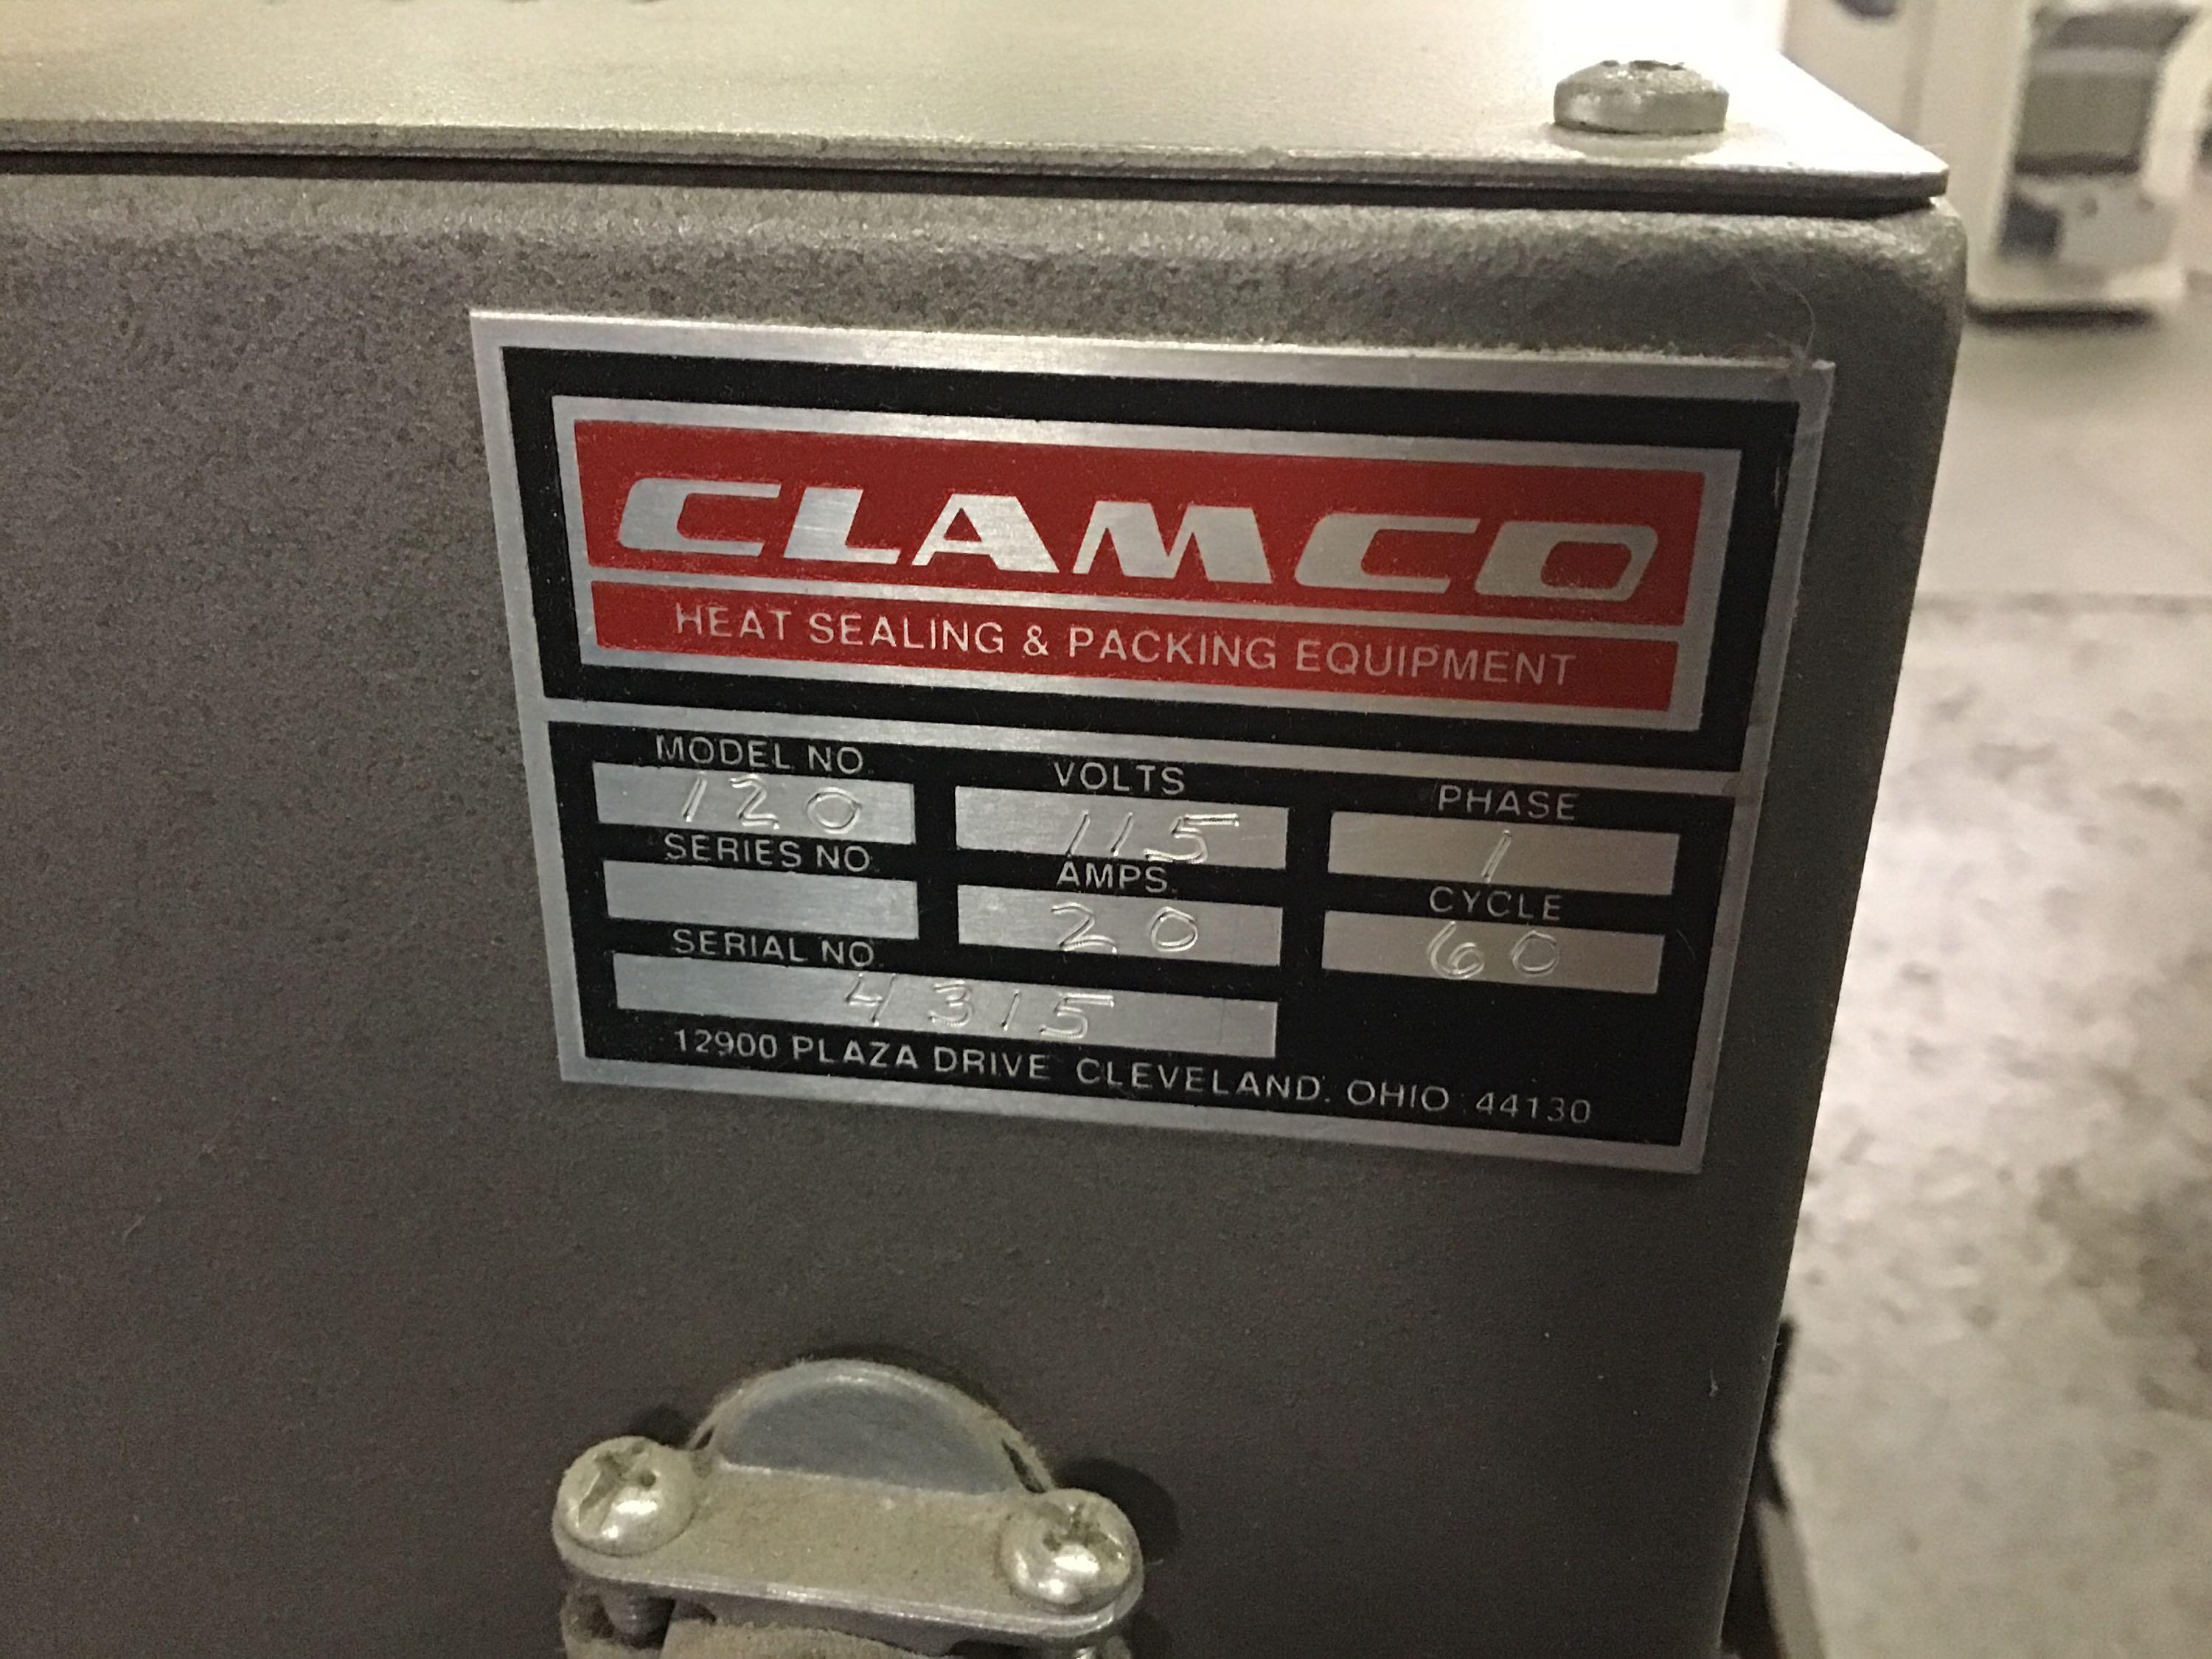 Clamco model no. 120 shrink wrap machine, powers on